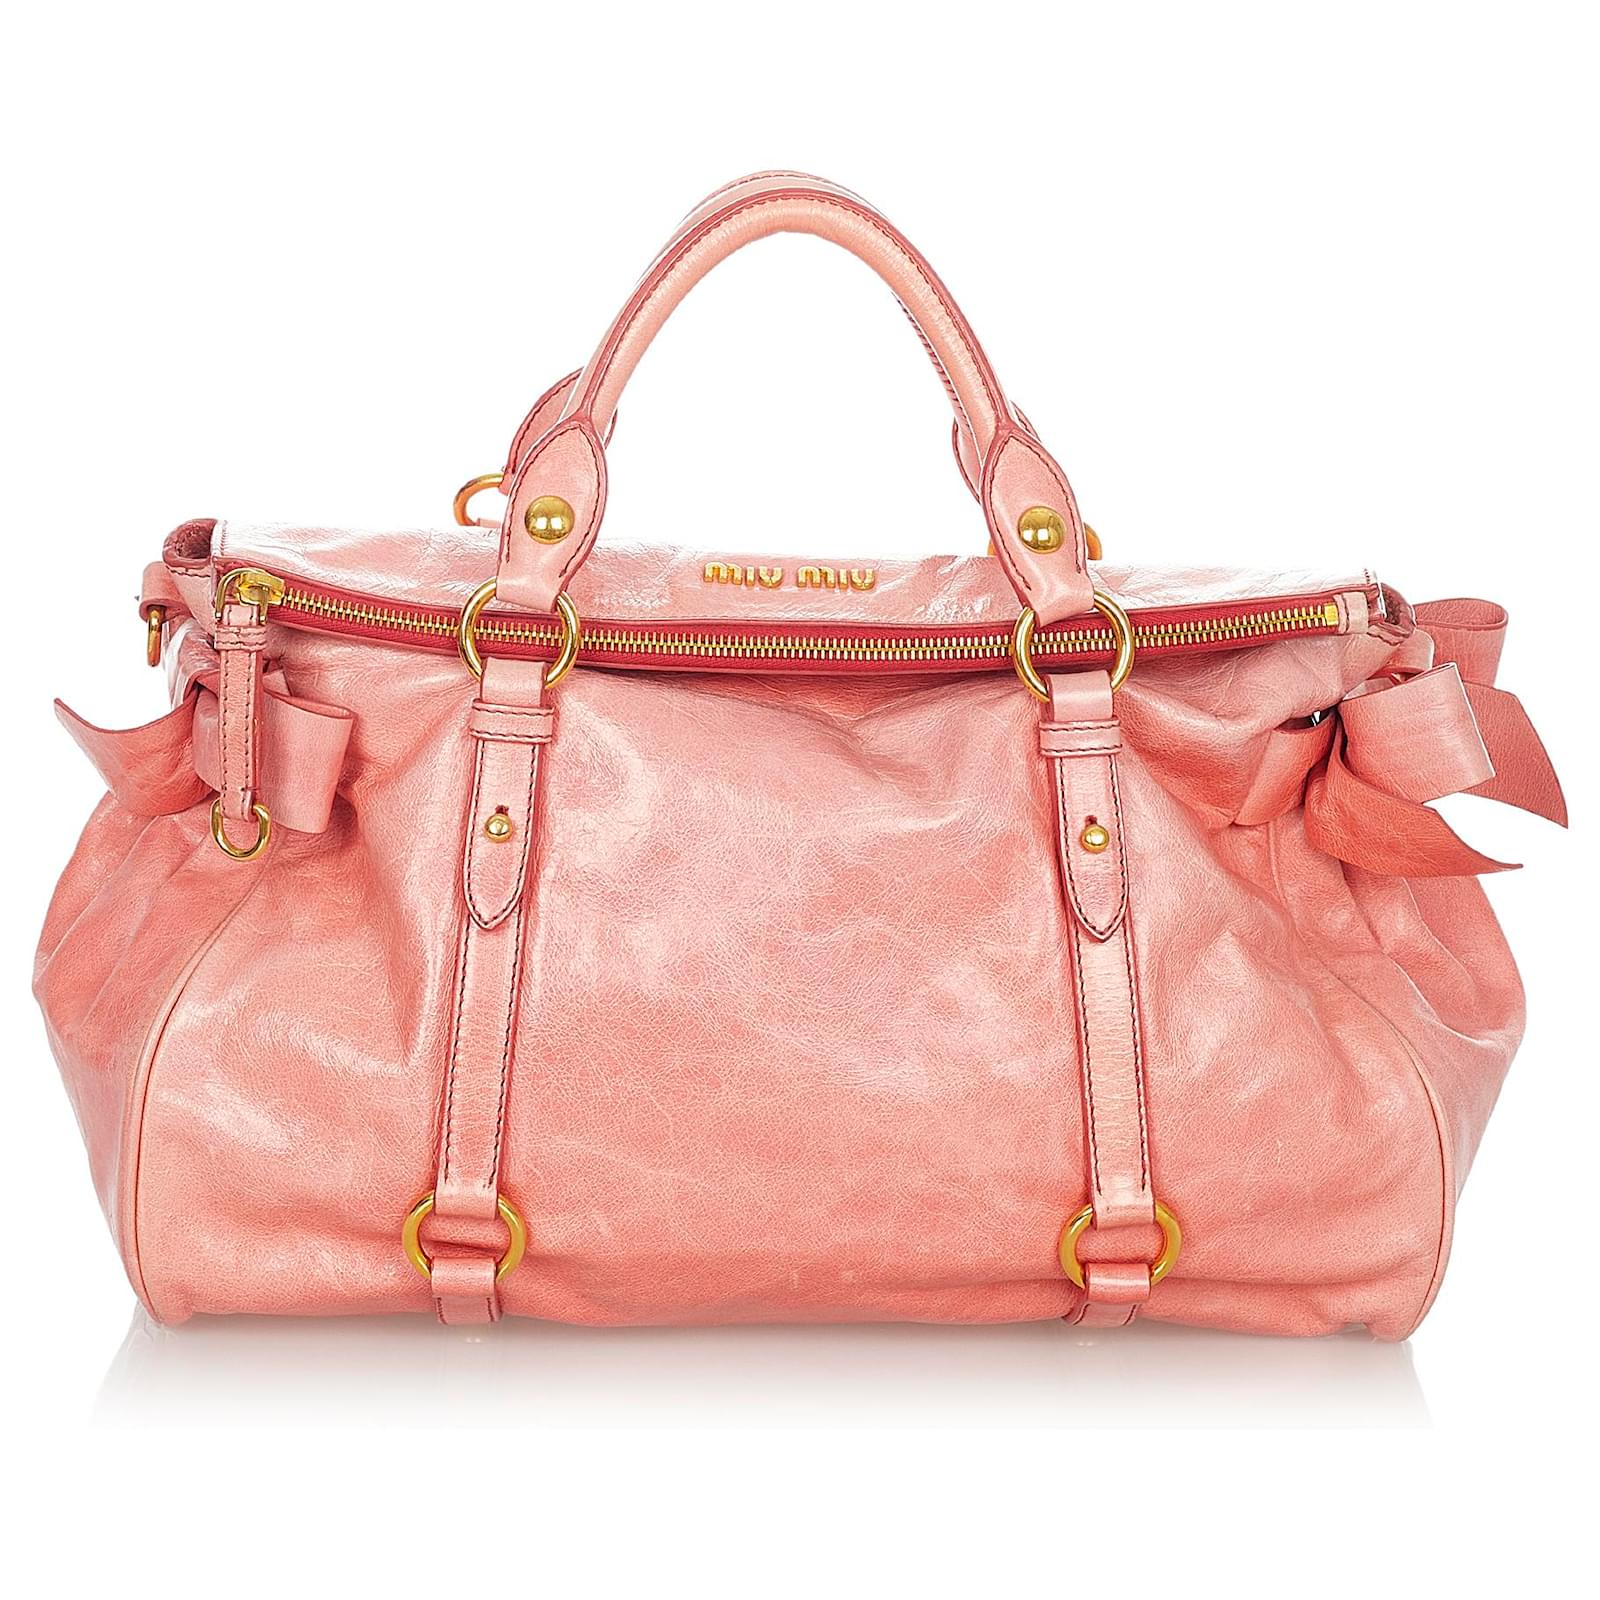 Miu Miu Vitello Lux Bow Shoulder Bag Pink Leather Pony-style